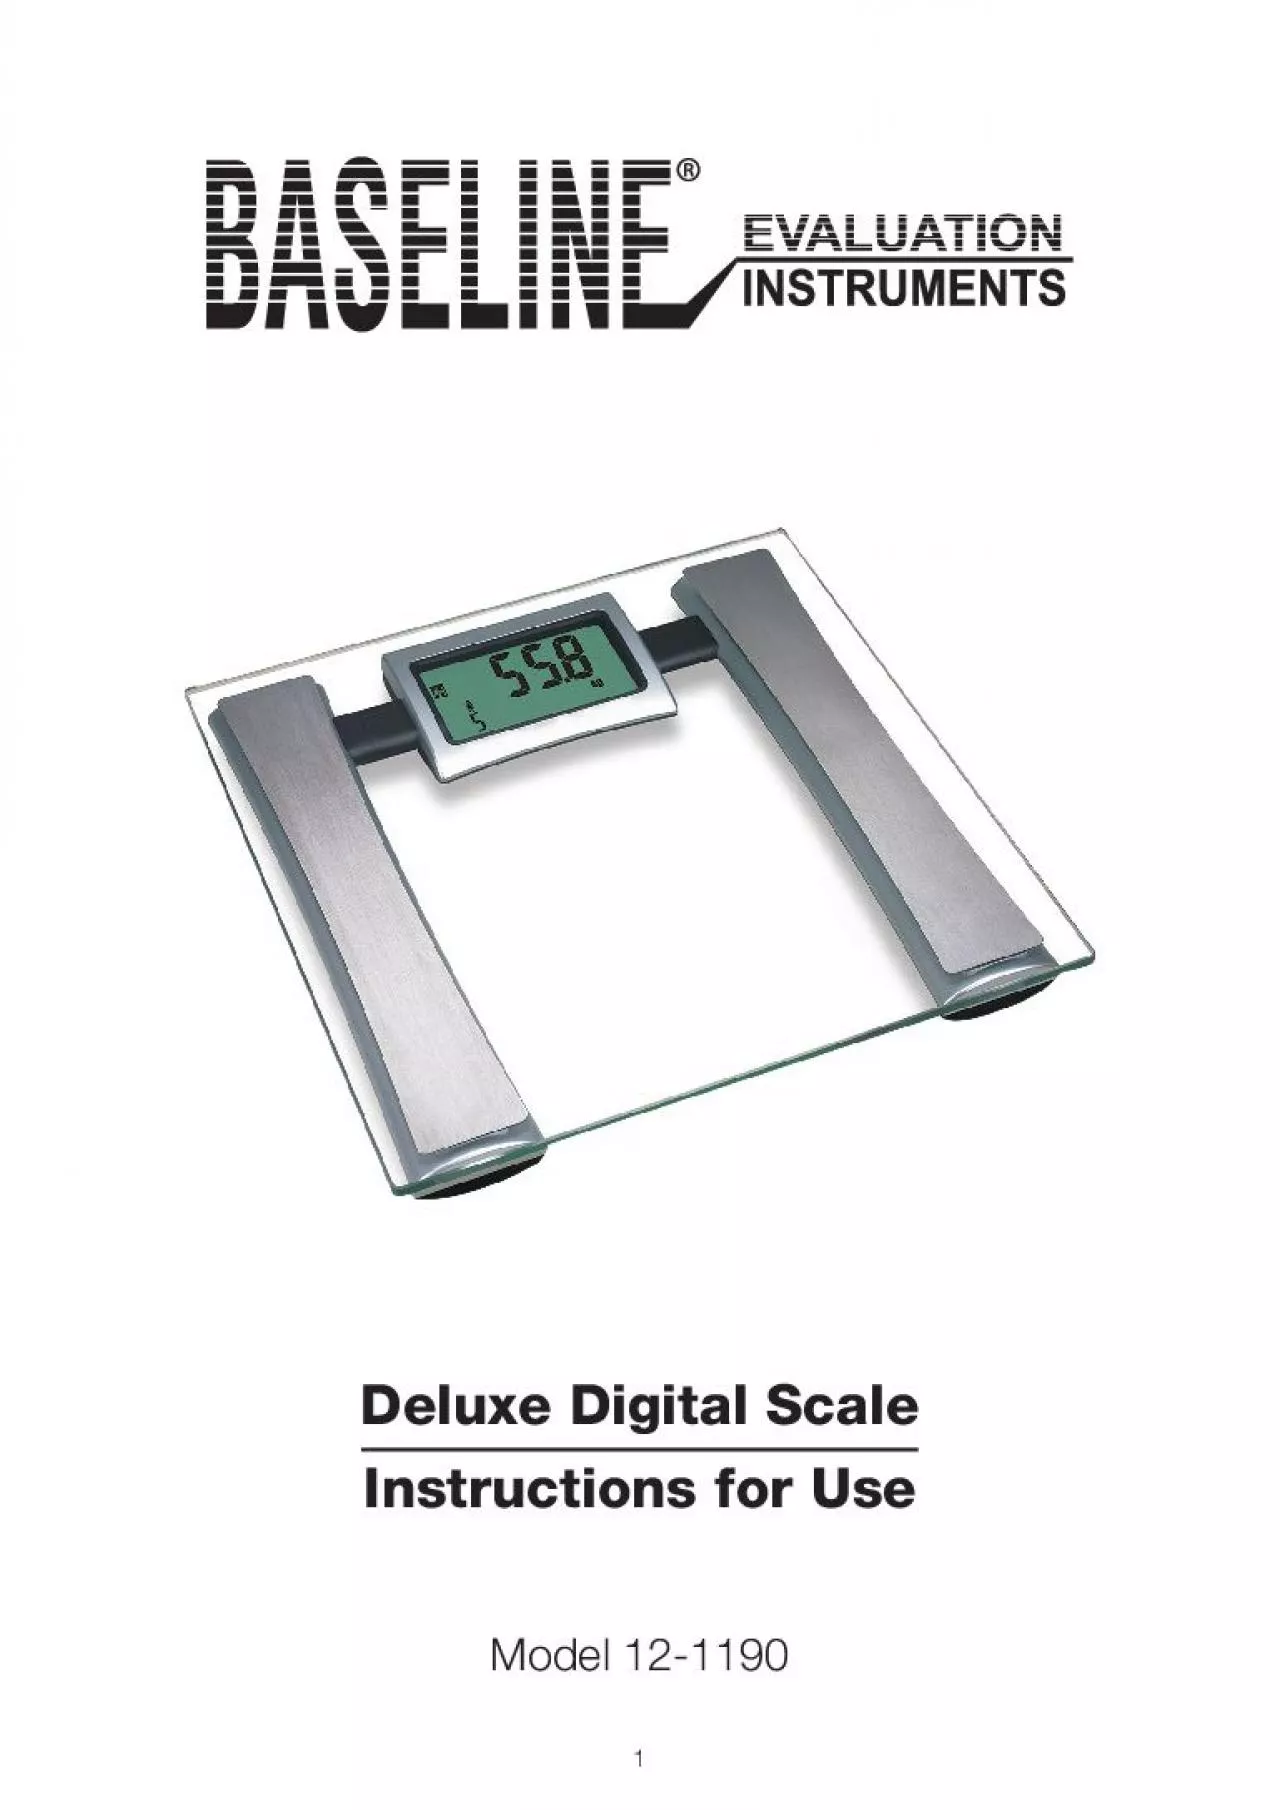 Deluxe Digital Scale